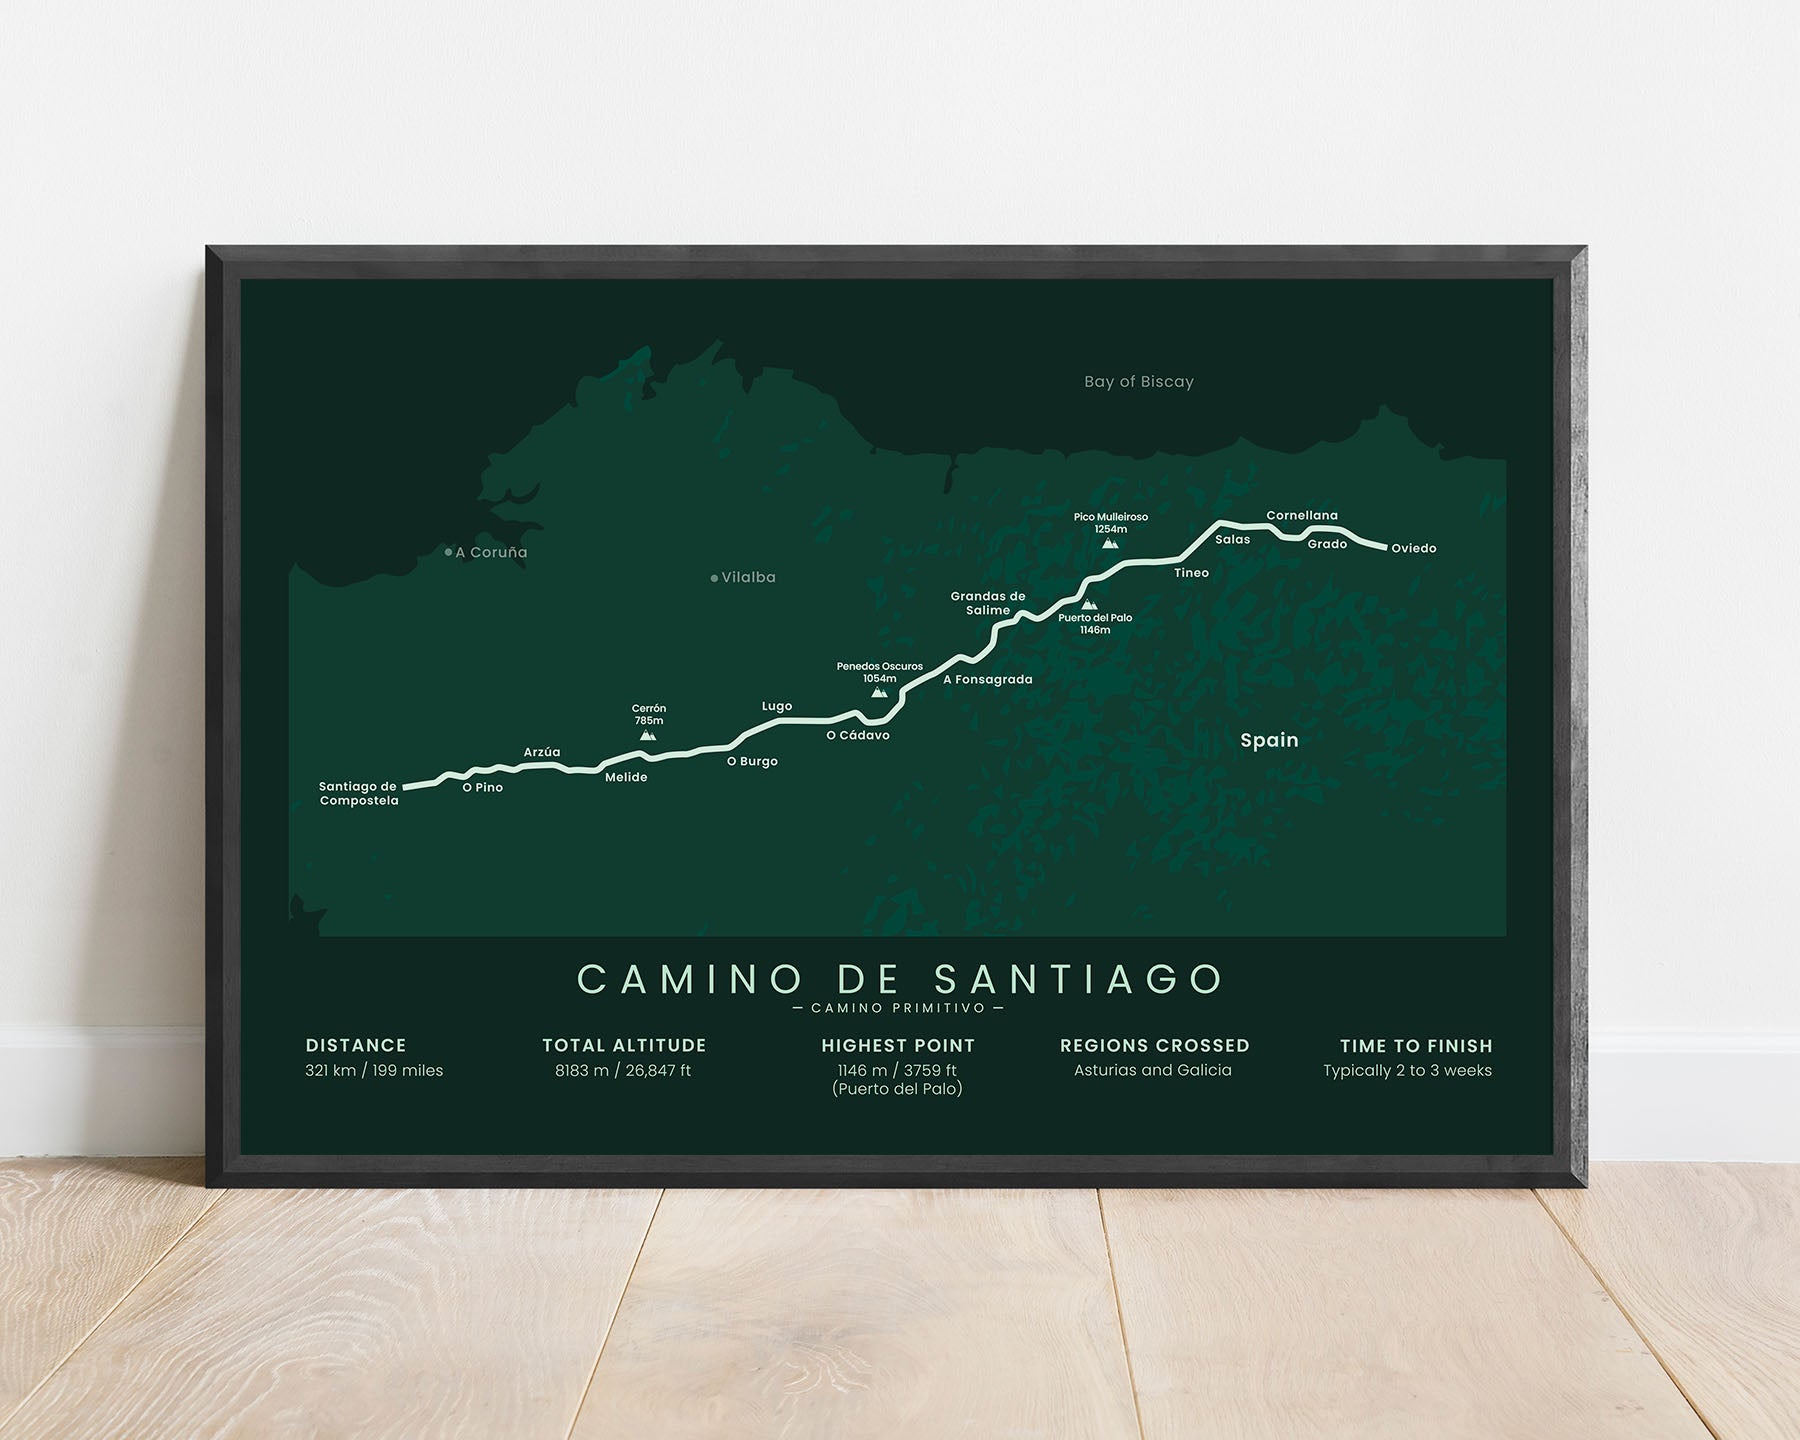 Camino de Santiago (Oviedo to Santiago de Compostela) path map art with green background